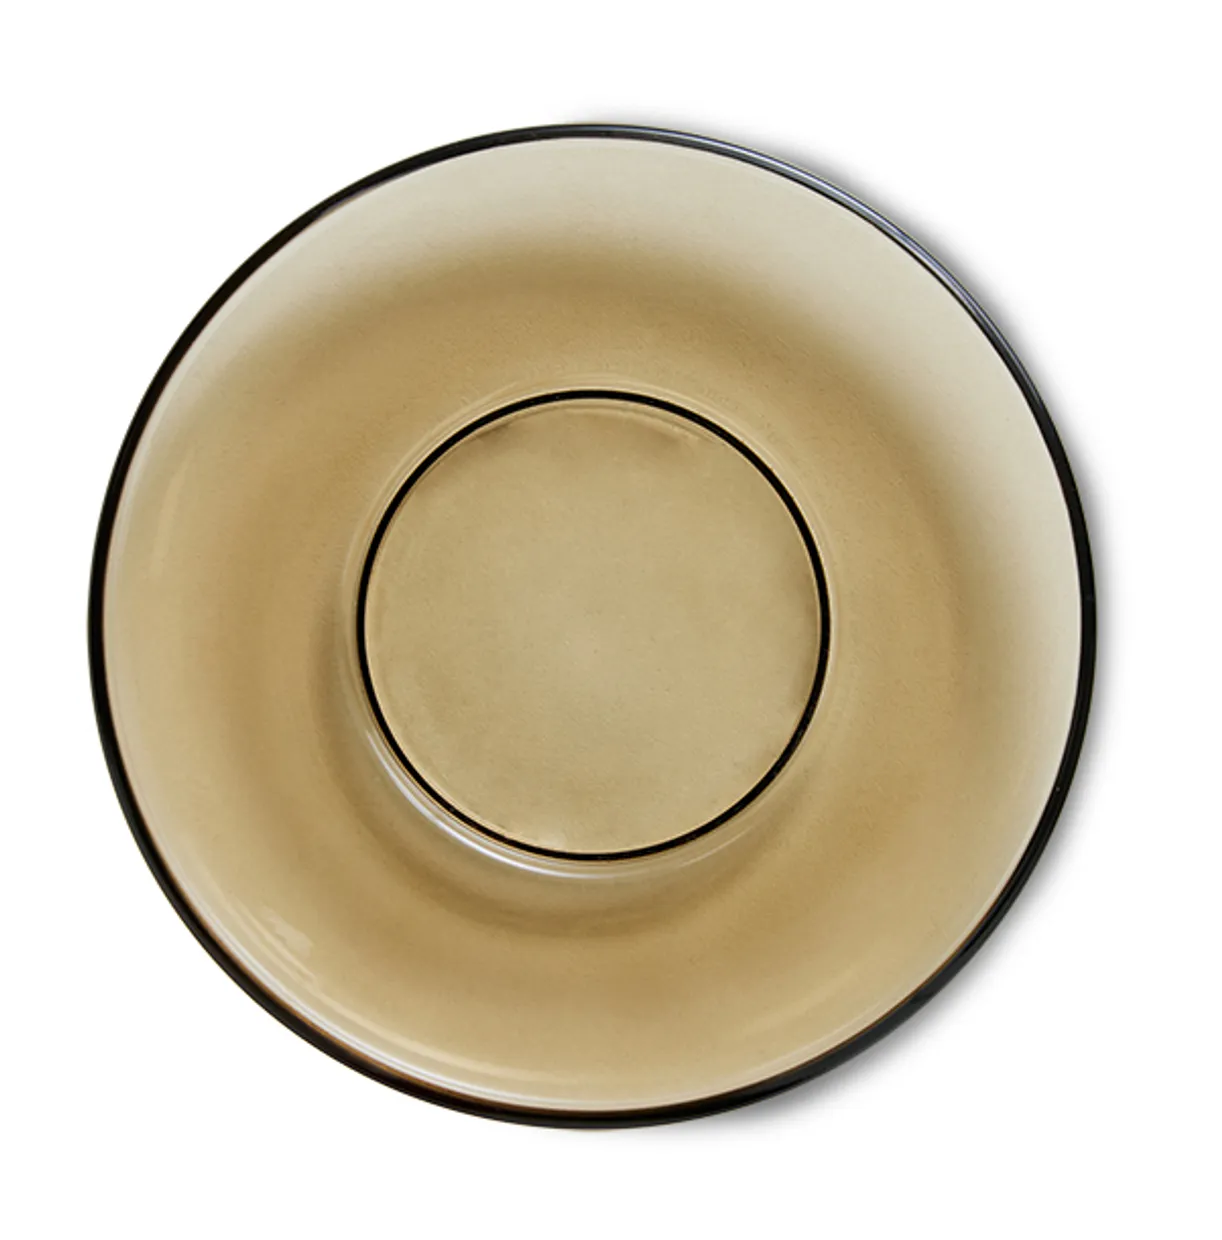 70s glassware: saucers mud brown (set of 4)